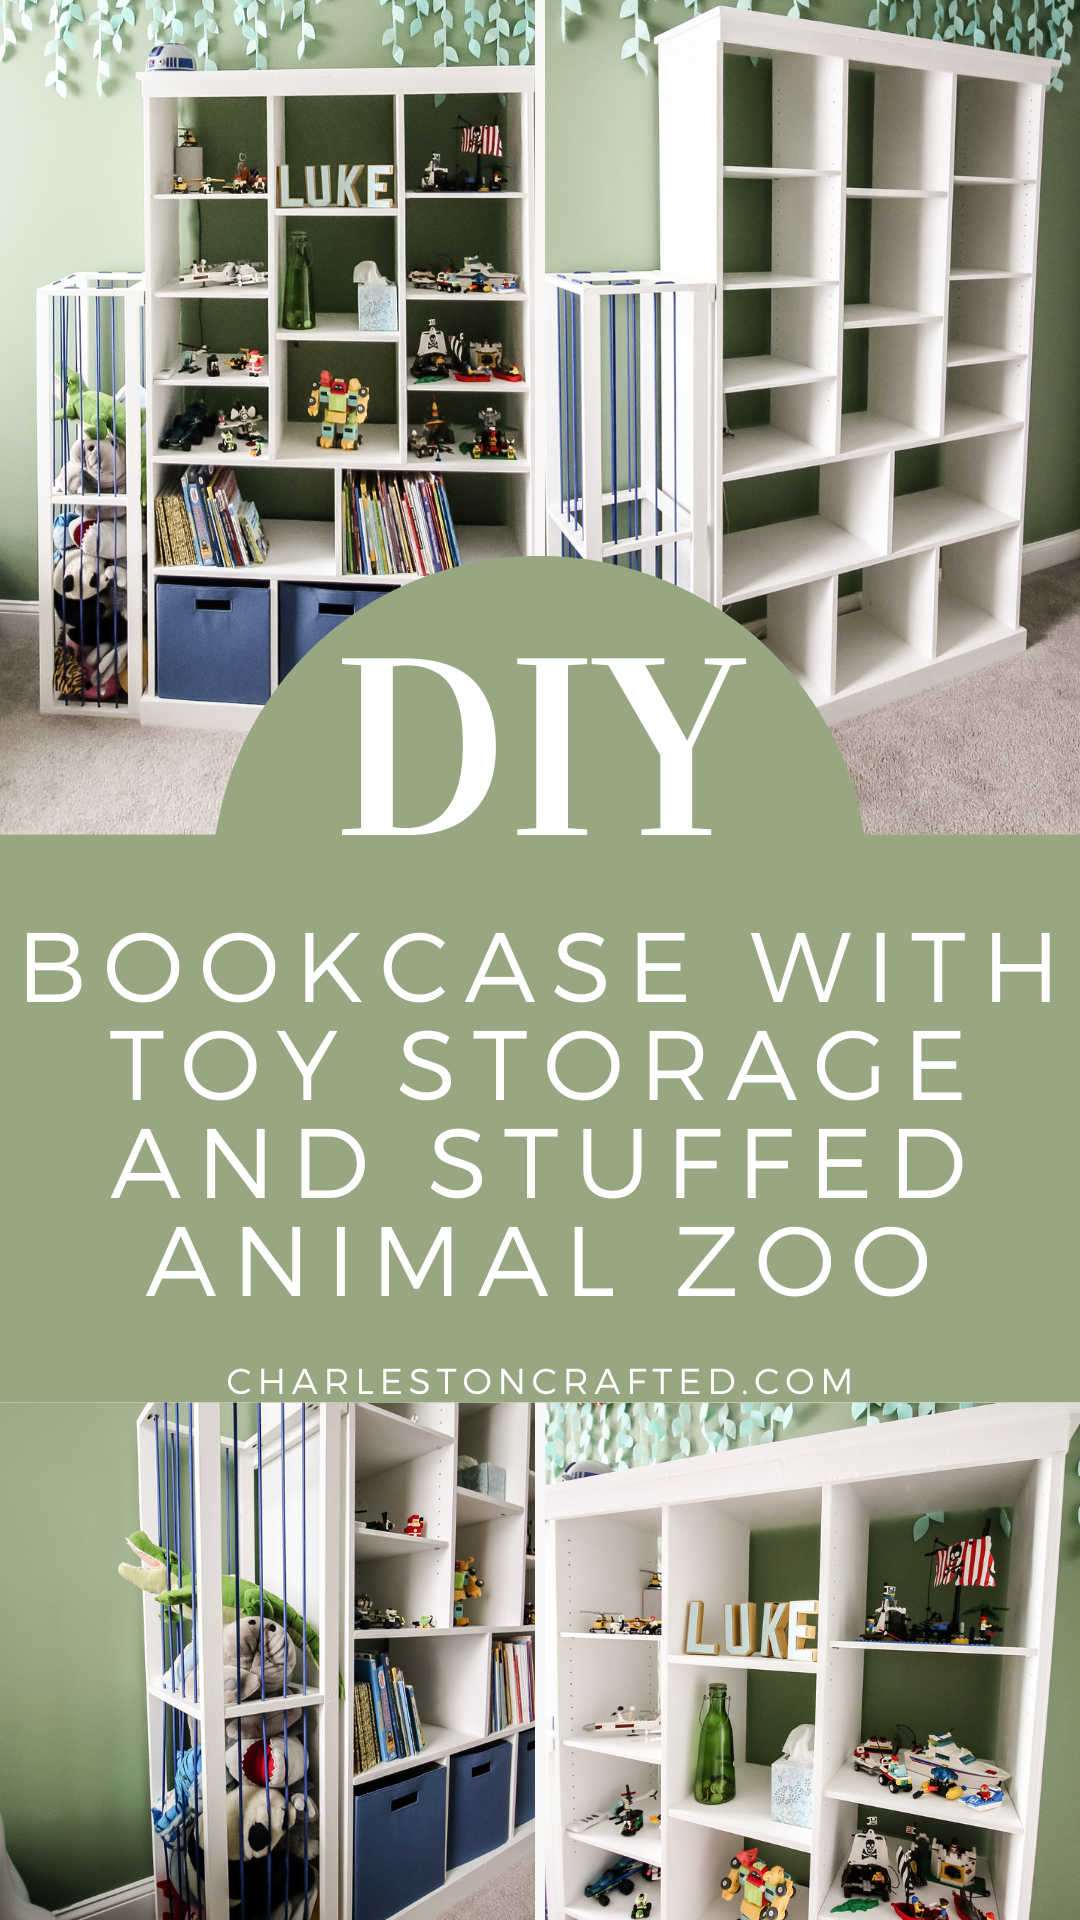 Stuffed Animal Storage Ideas - Create Your Own Little Zoo